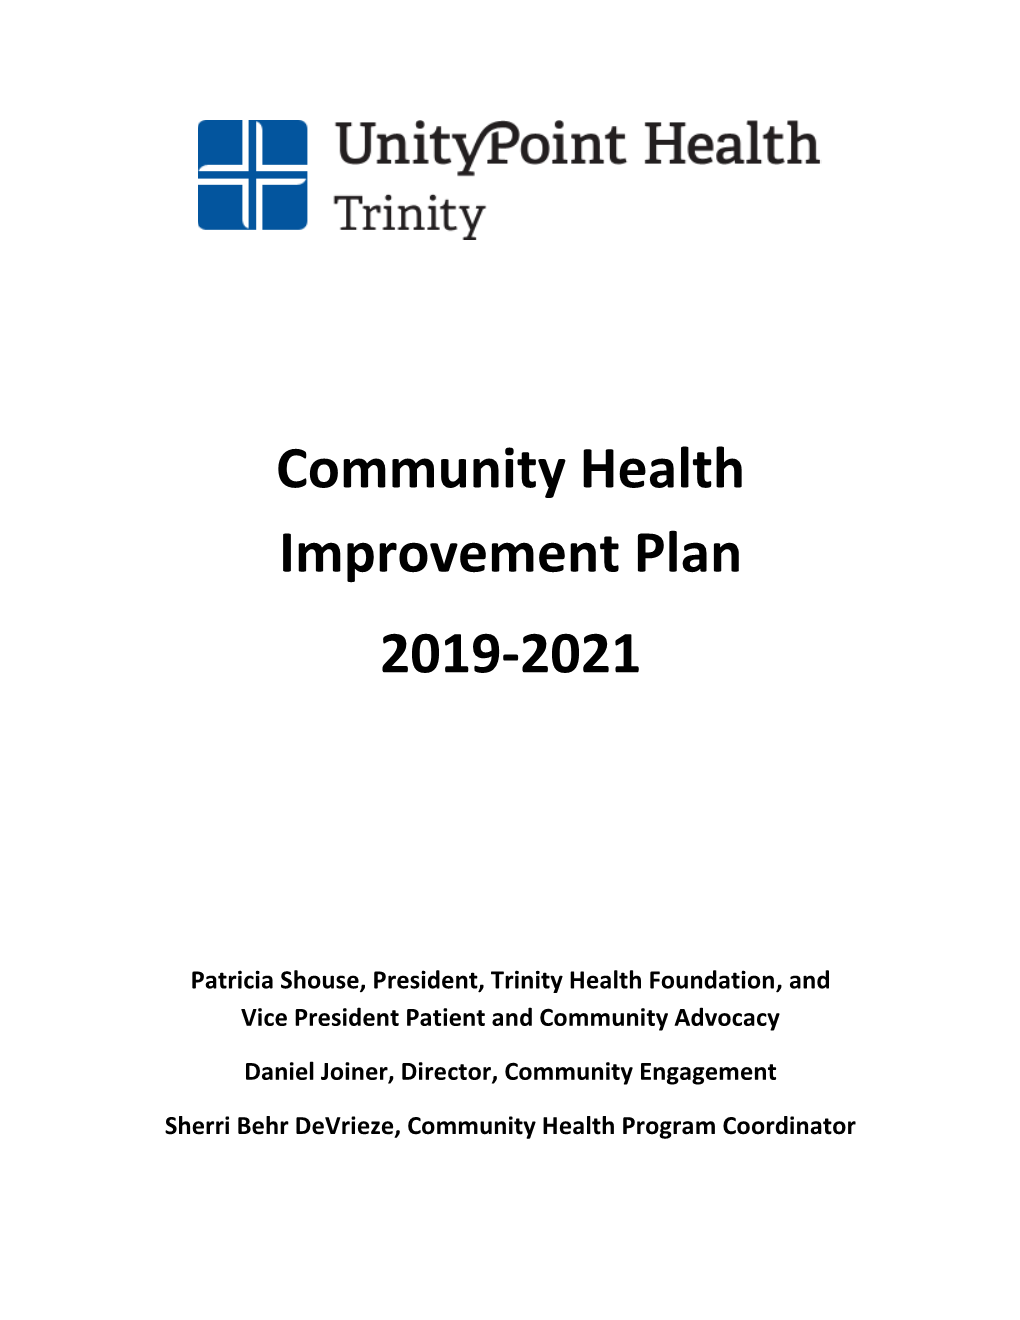 Community Health Improvement Plan 2019-2021